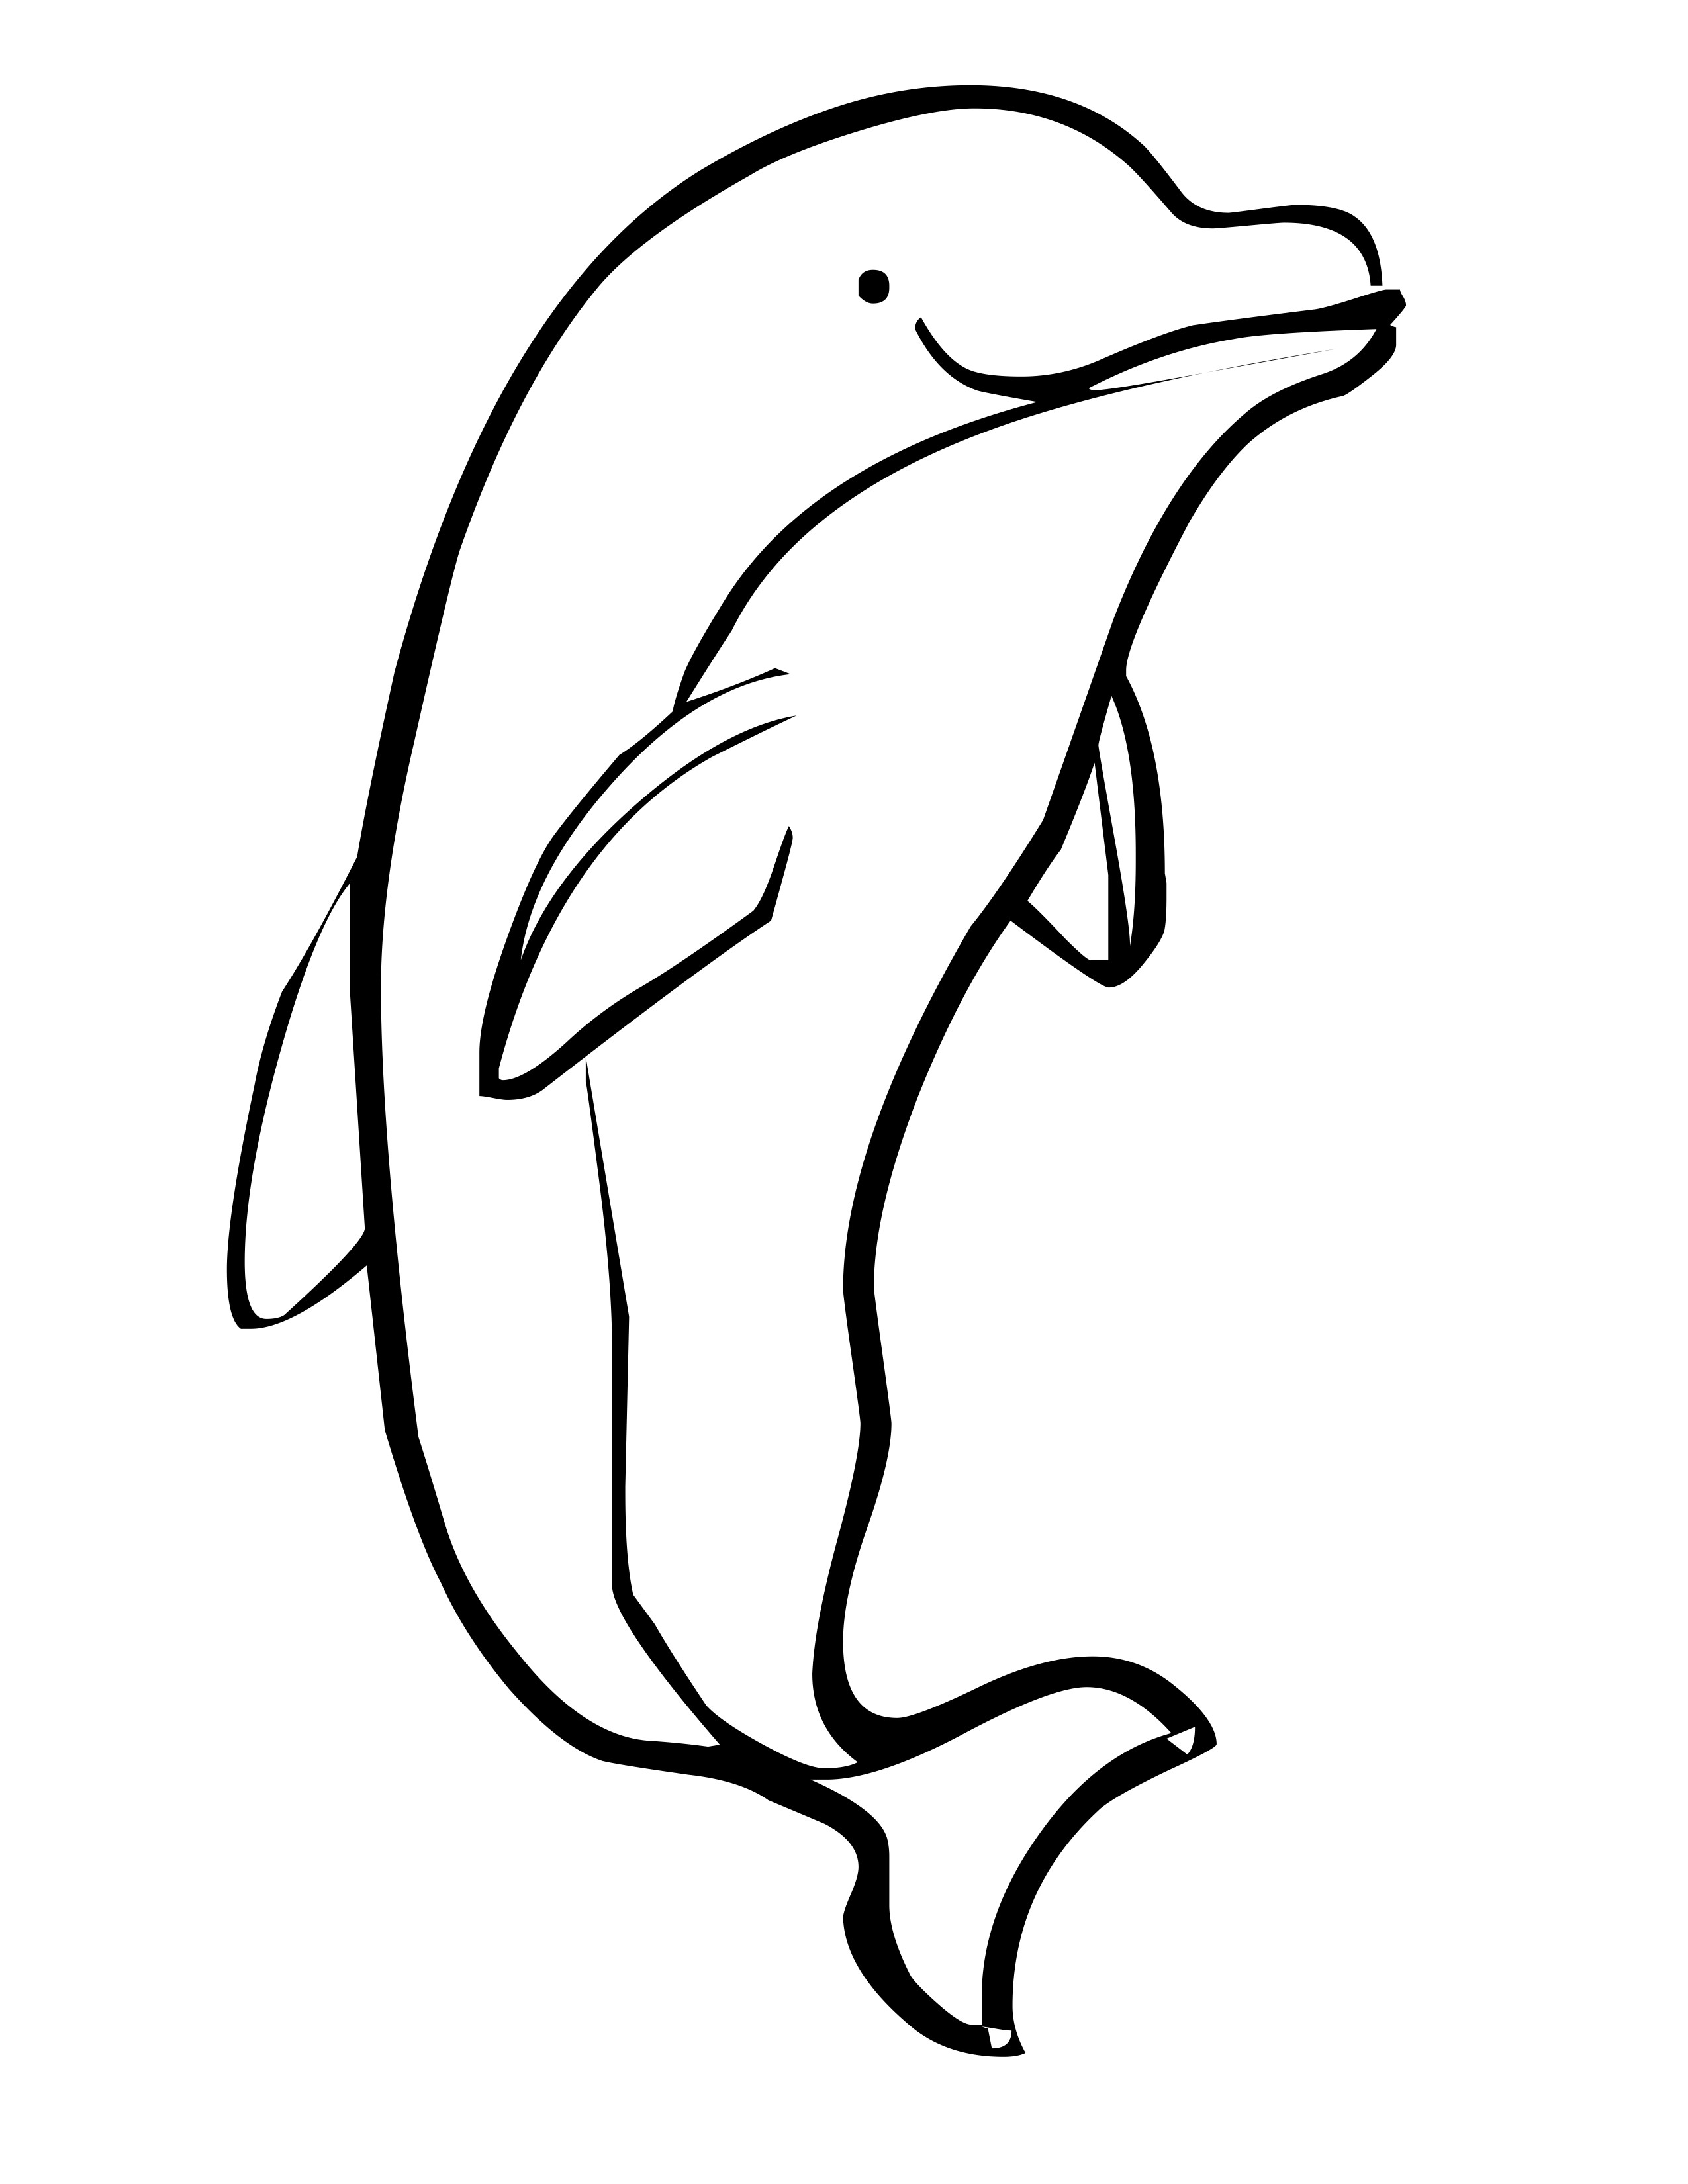 Беломордый Дельфин раскраска